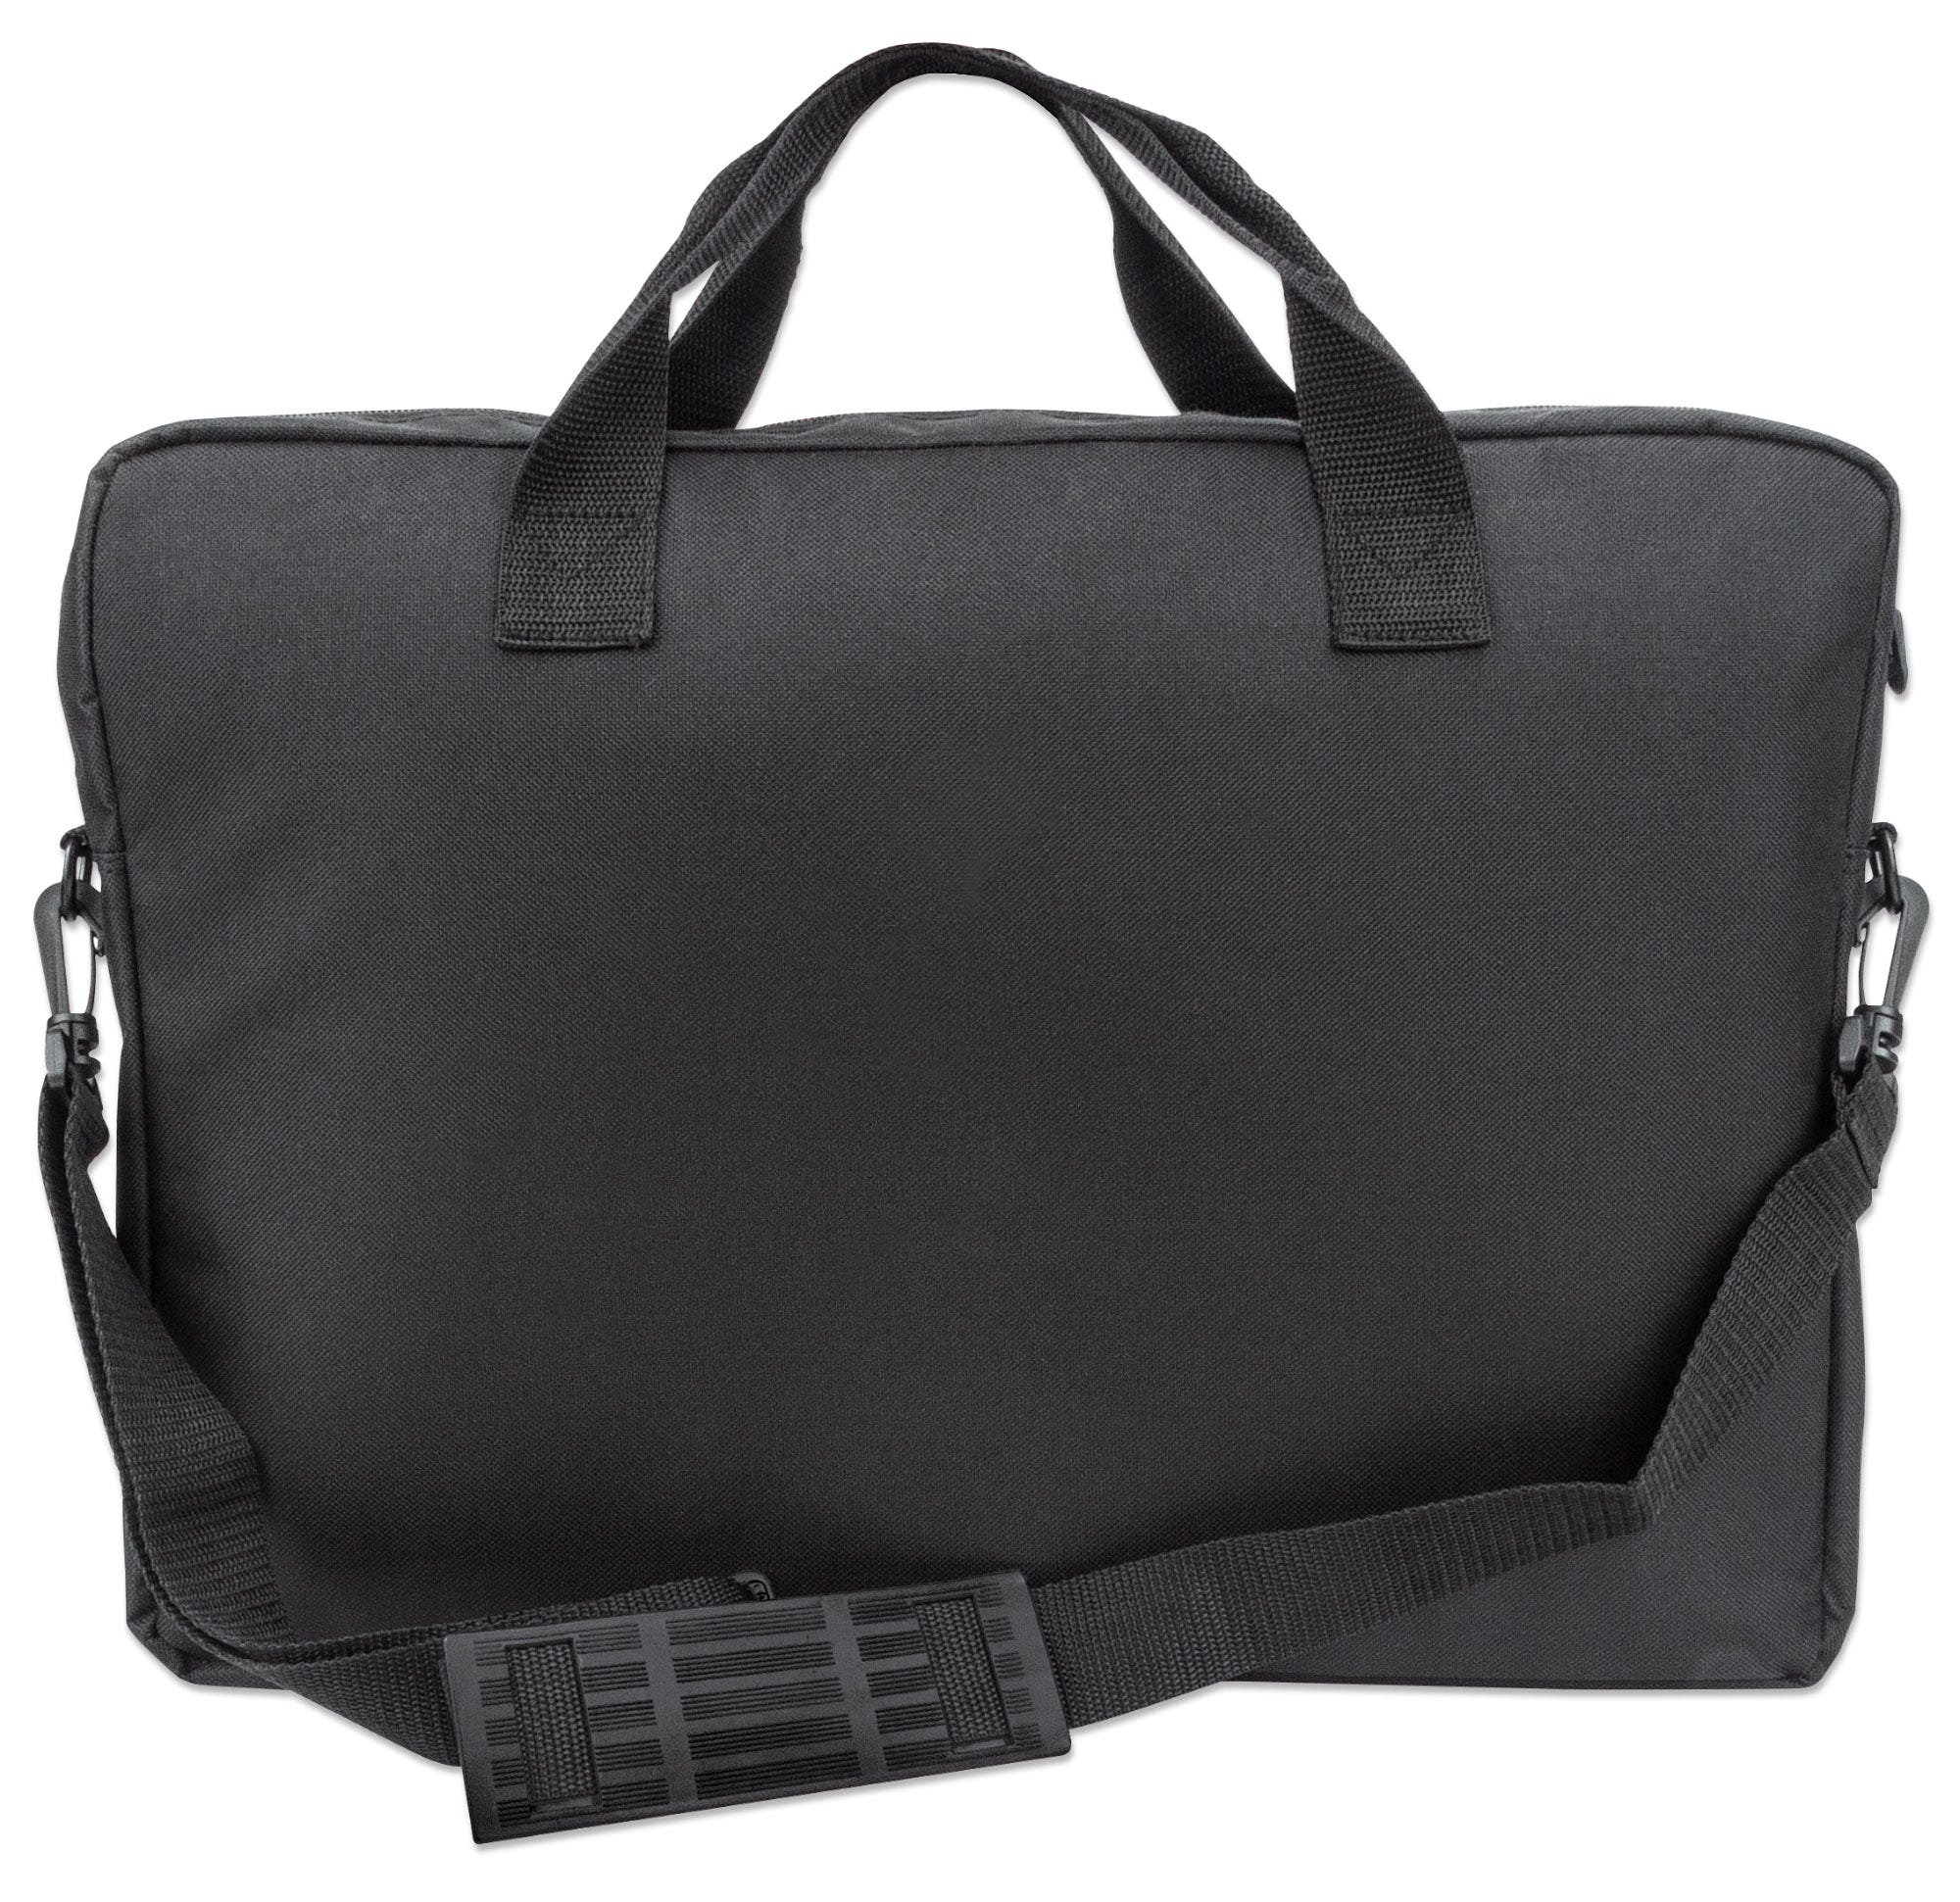 Manhattan London Laptop Bag 17.3", Top Loader, Accessories Pocket, Shoulder Strap (removable), Black, Three Year Warranty